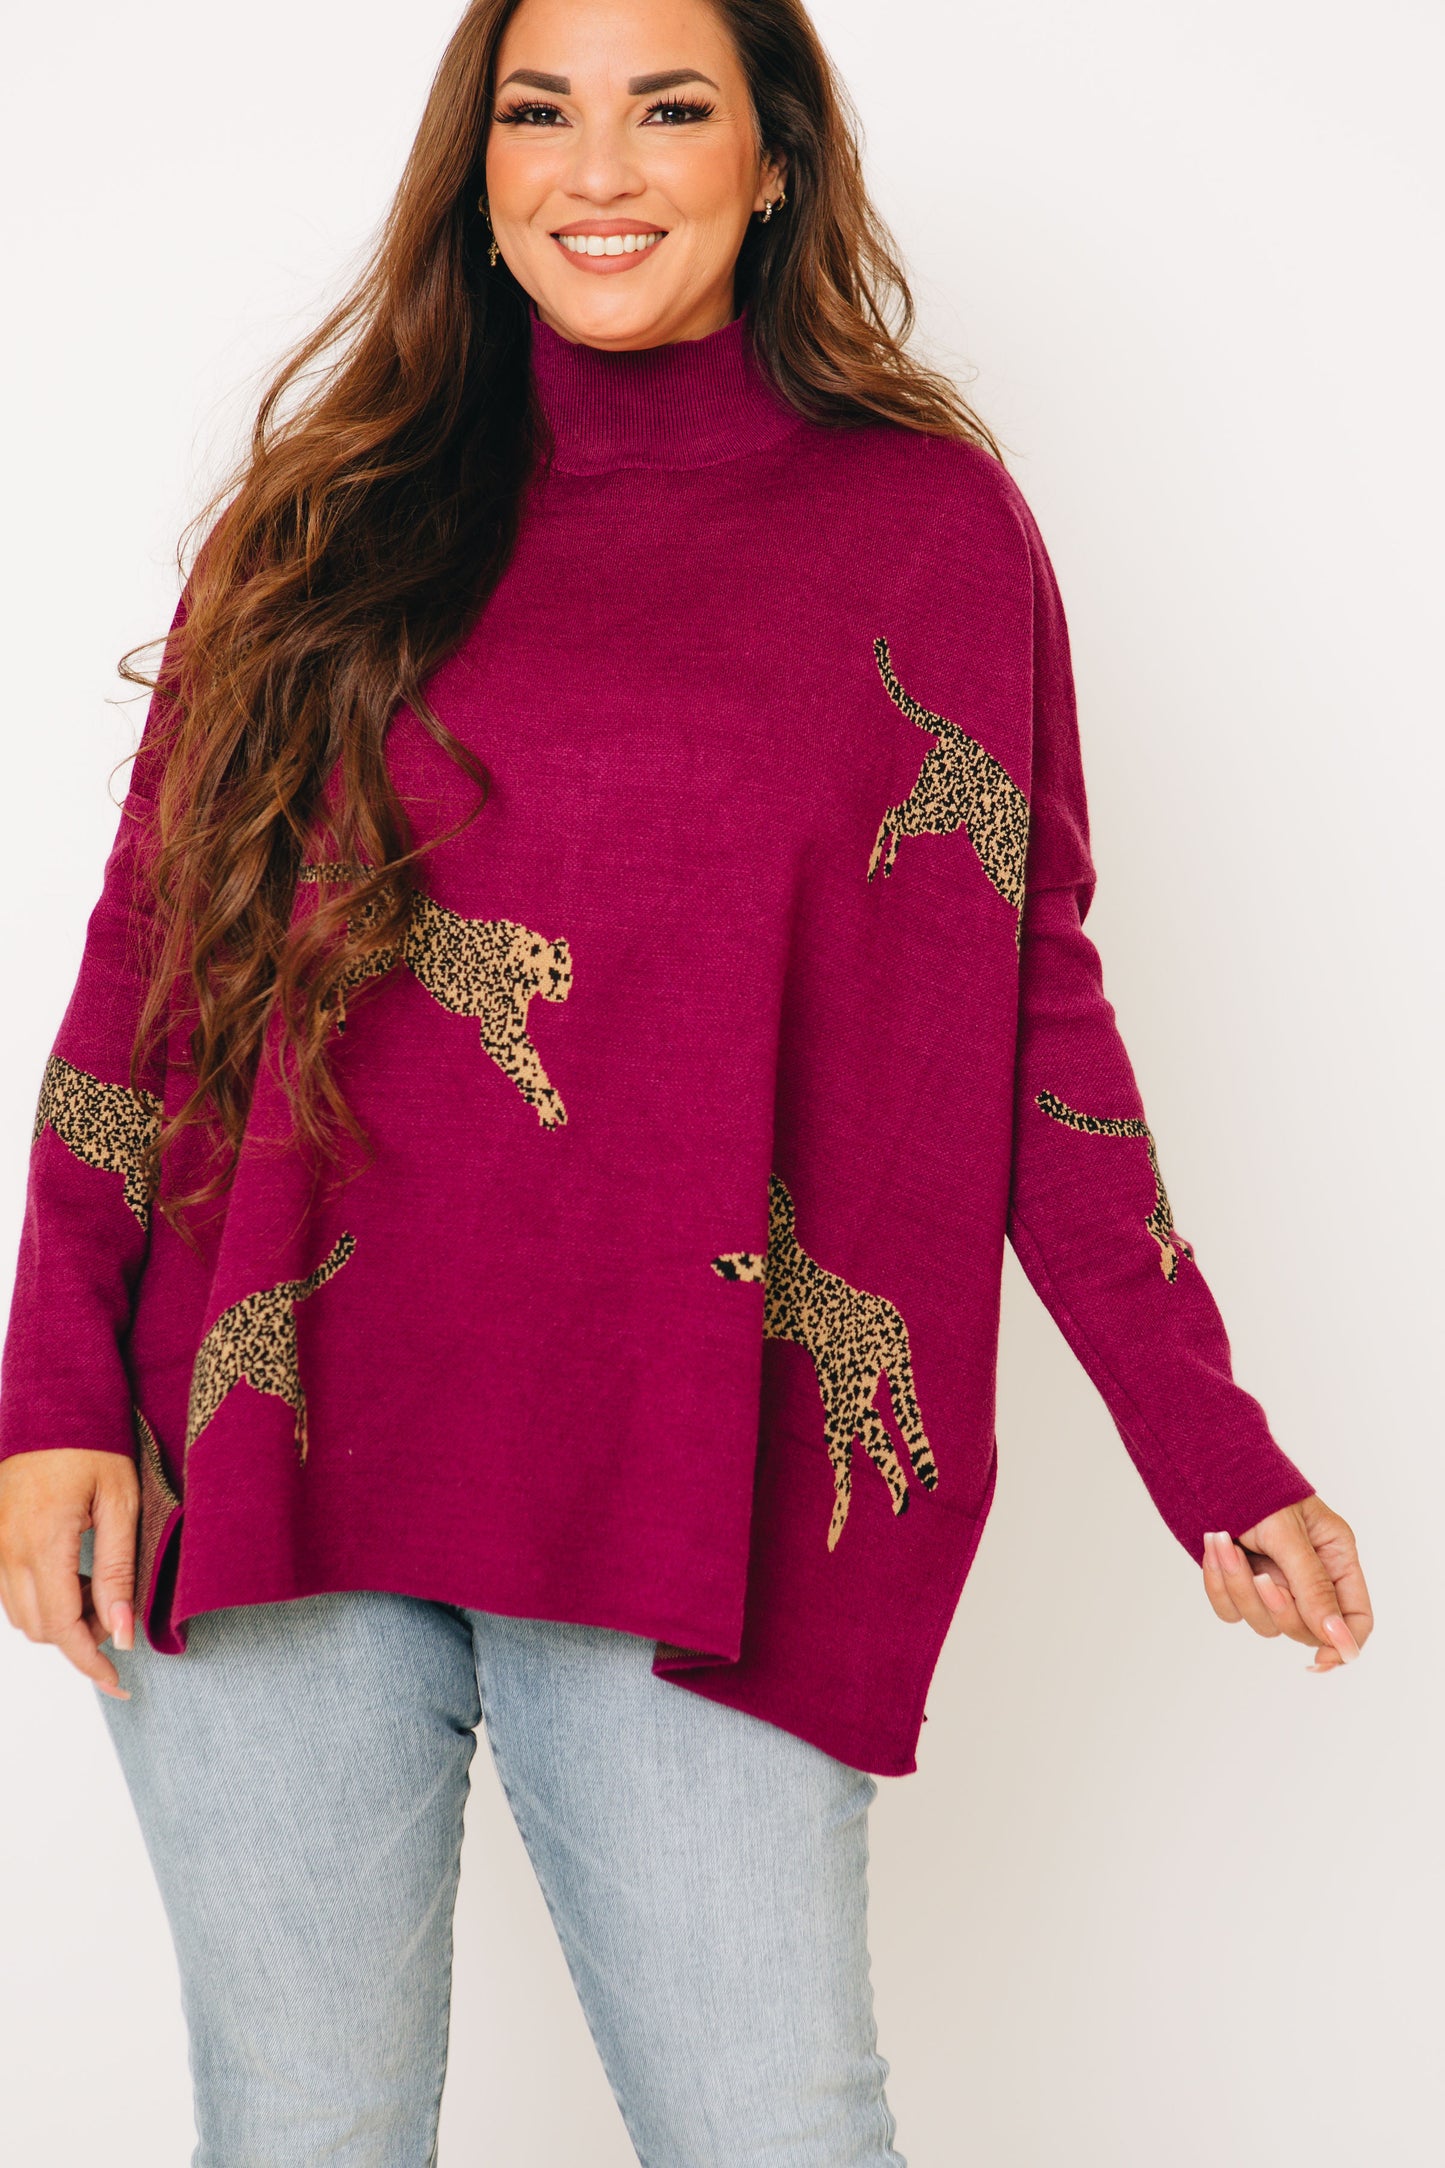 Regal Roar - Cheetah Print Mock Neck Long Sleeve Sweater (S-2XL)